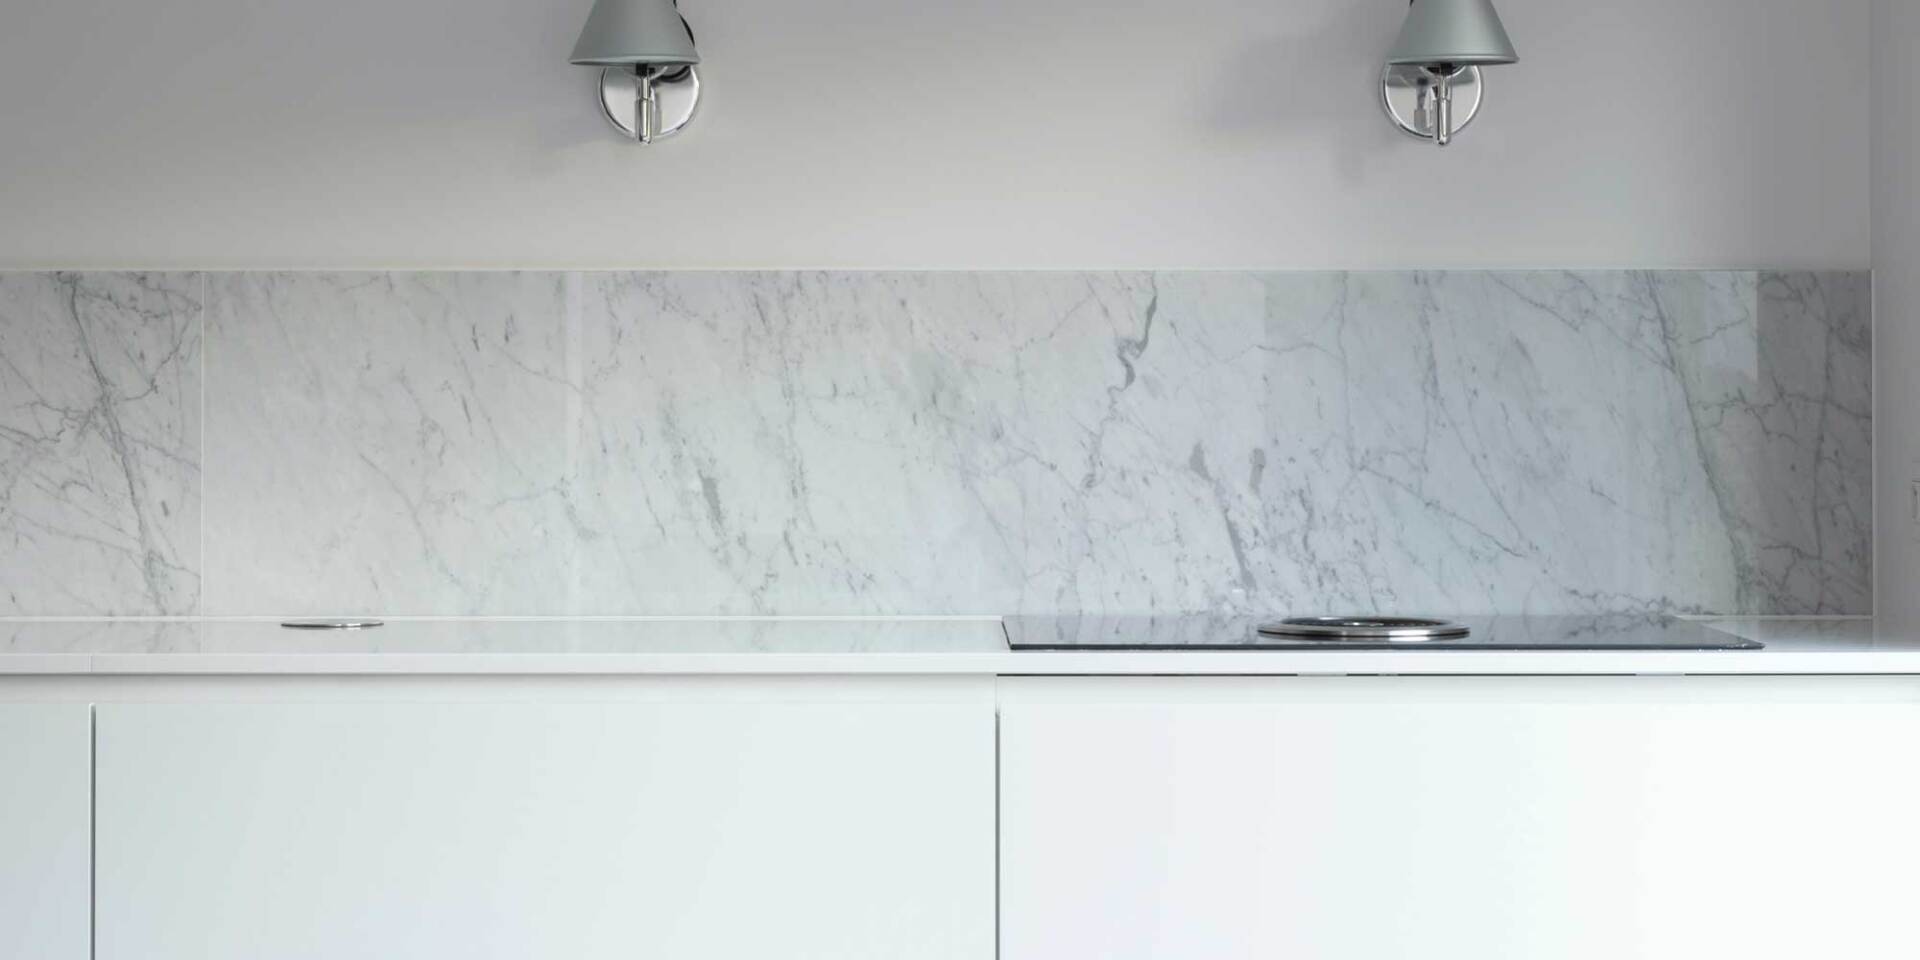 A gray marble backsplash gives texture to this sleek white kitchen.